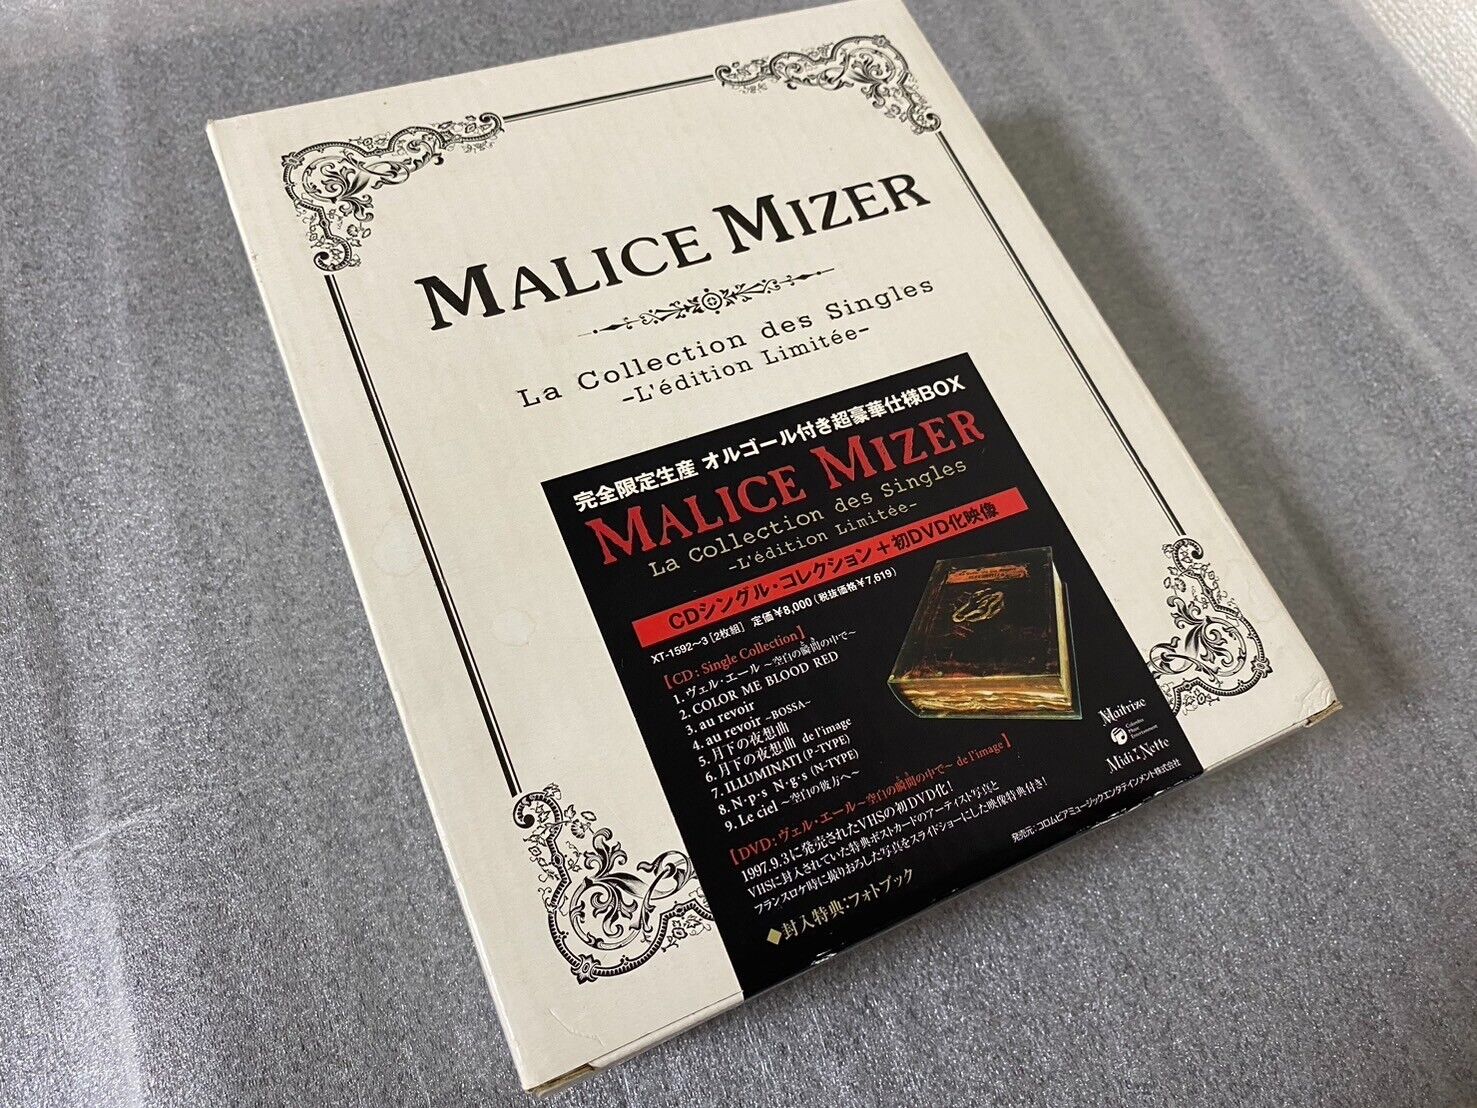 MALICE MIZER La Collection des Singles Limited Edition CD DVD Music box Gackt